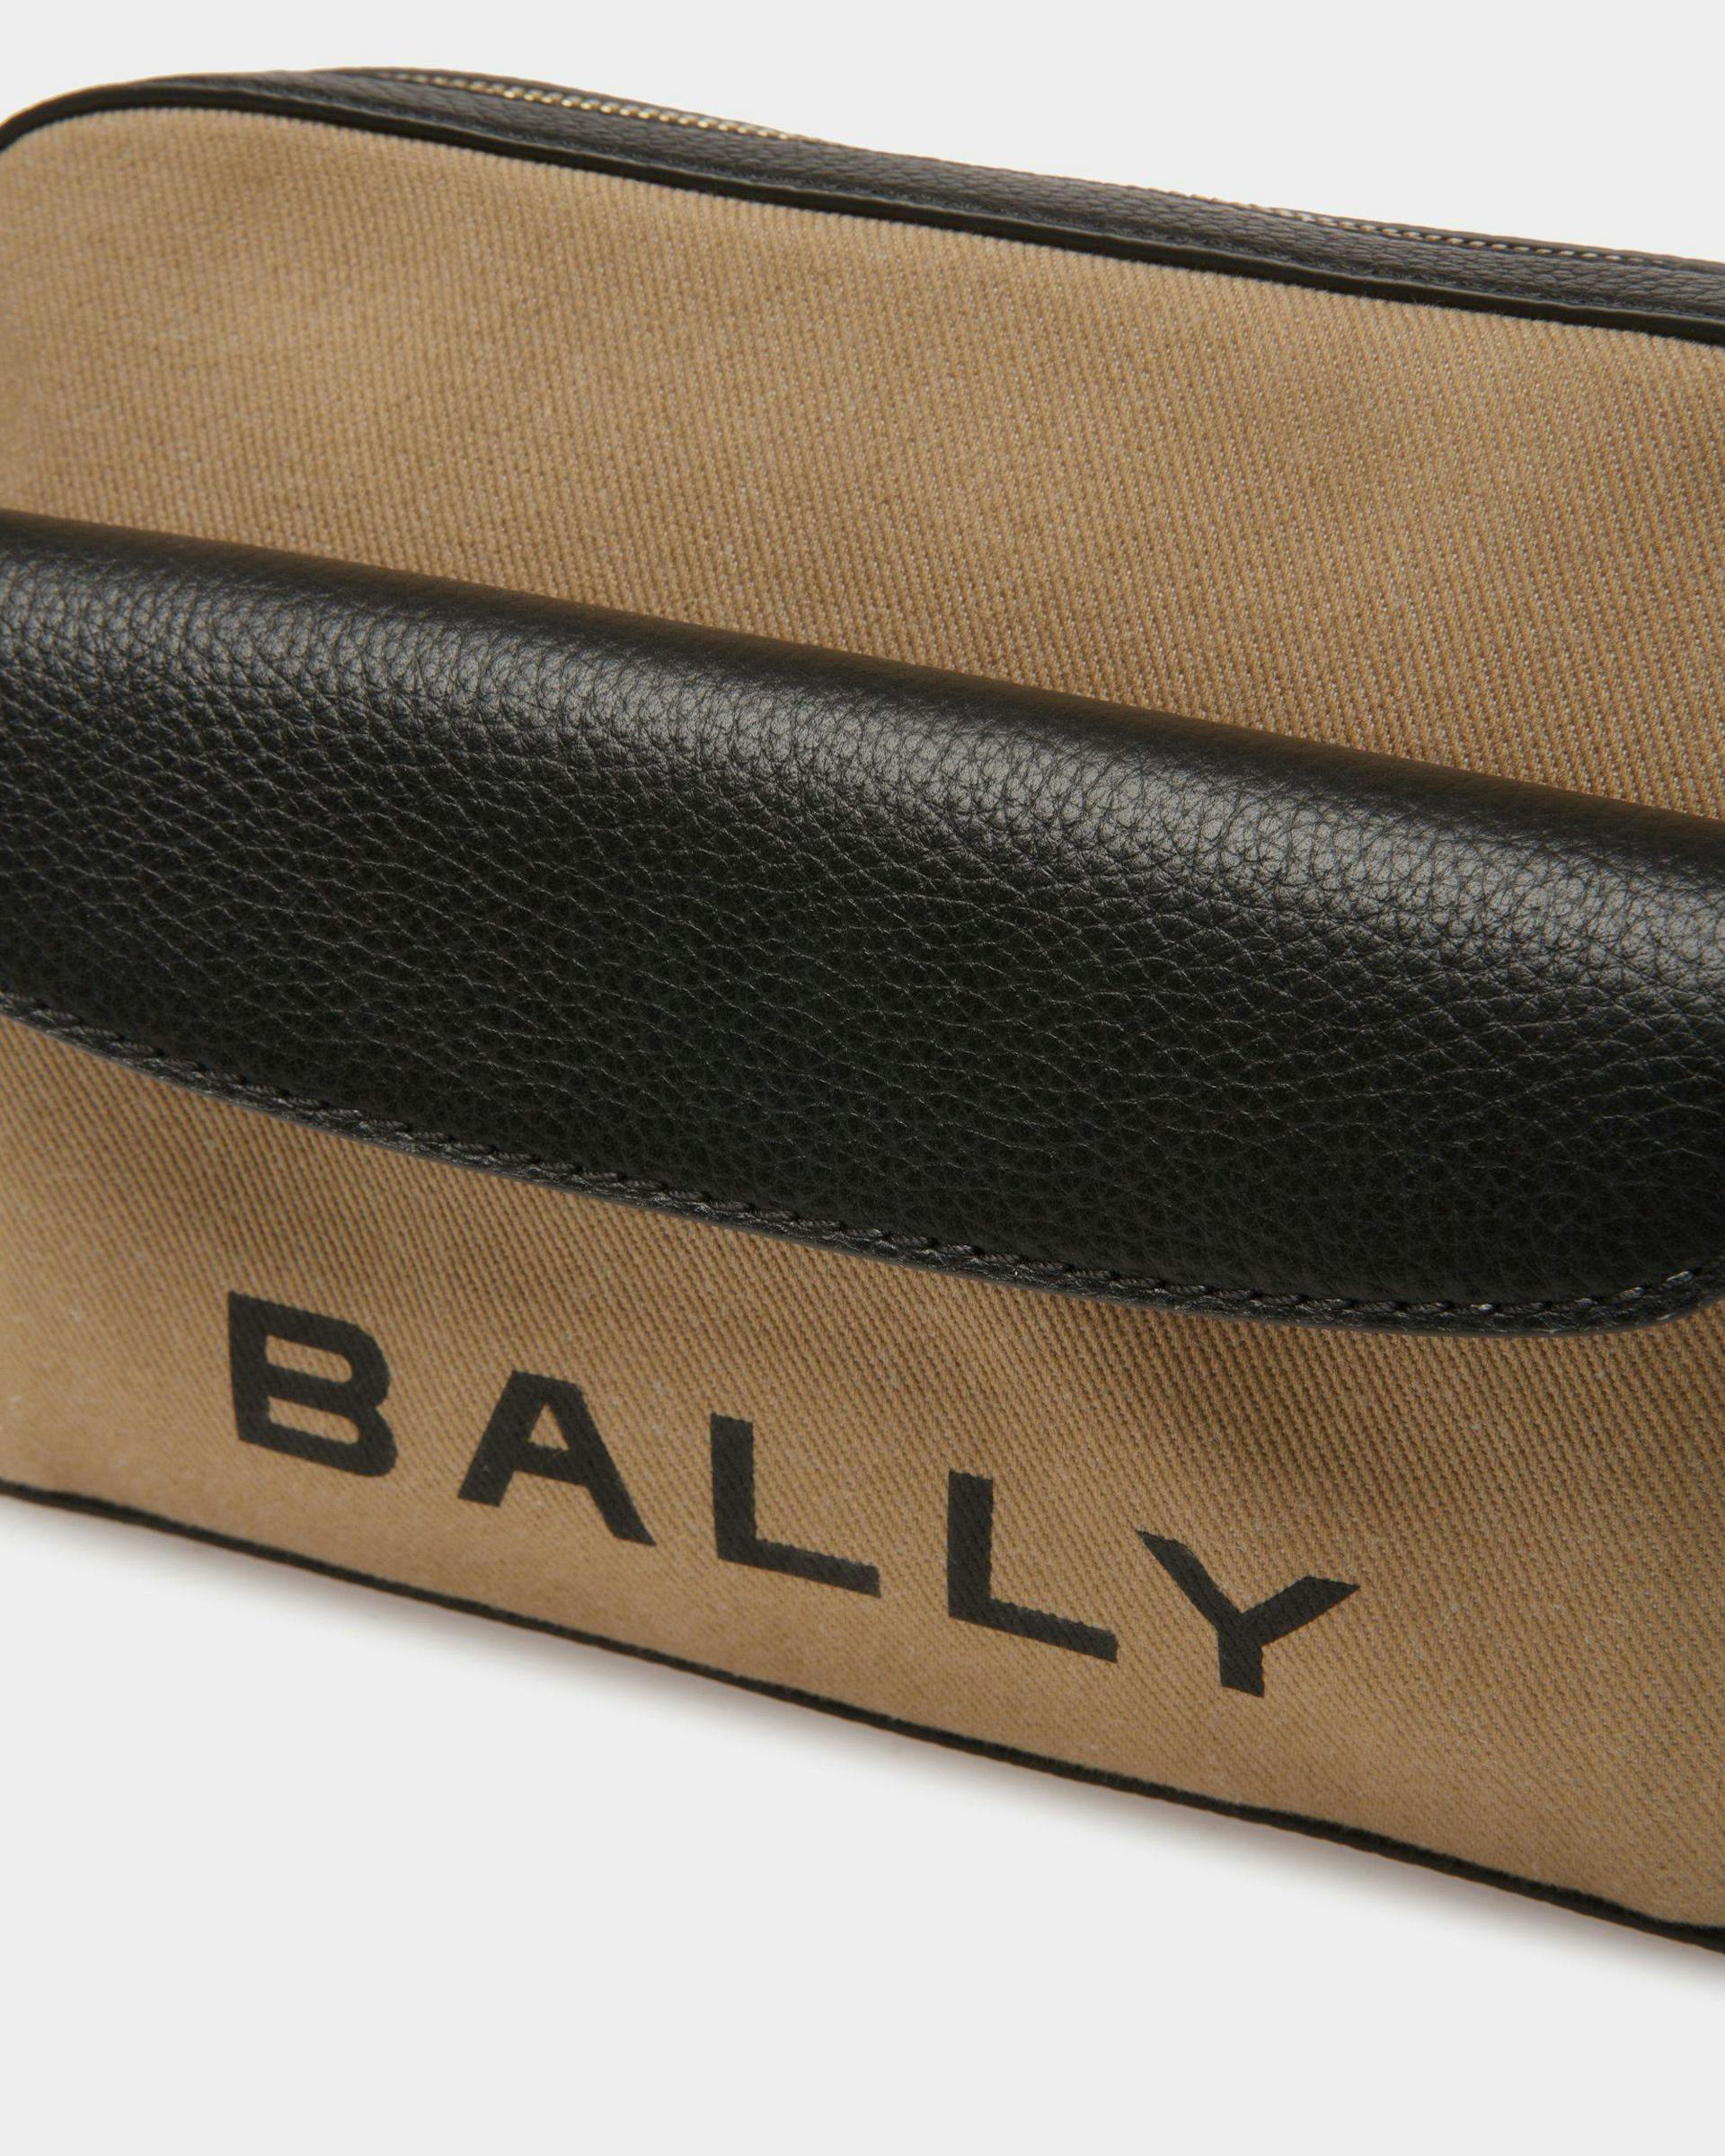 Women's Bar Crossbody Bag In Sand And Black Fabric | Bally | Still Life Detail